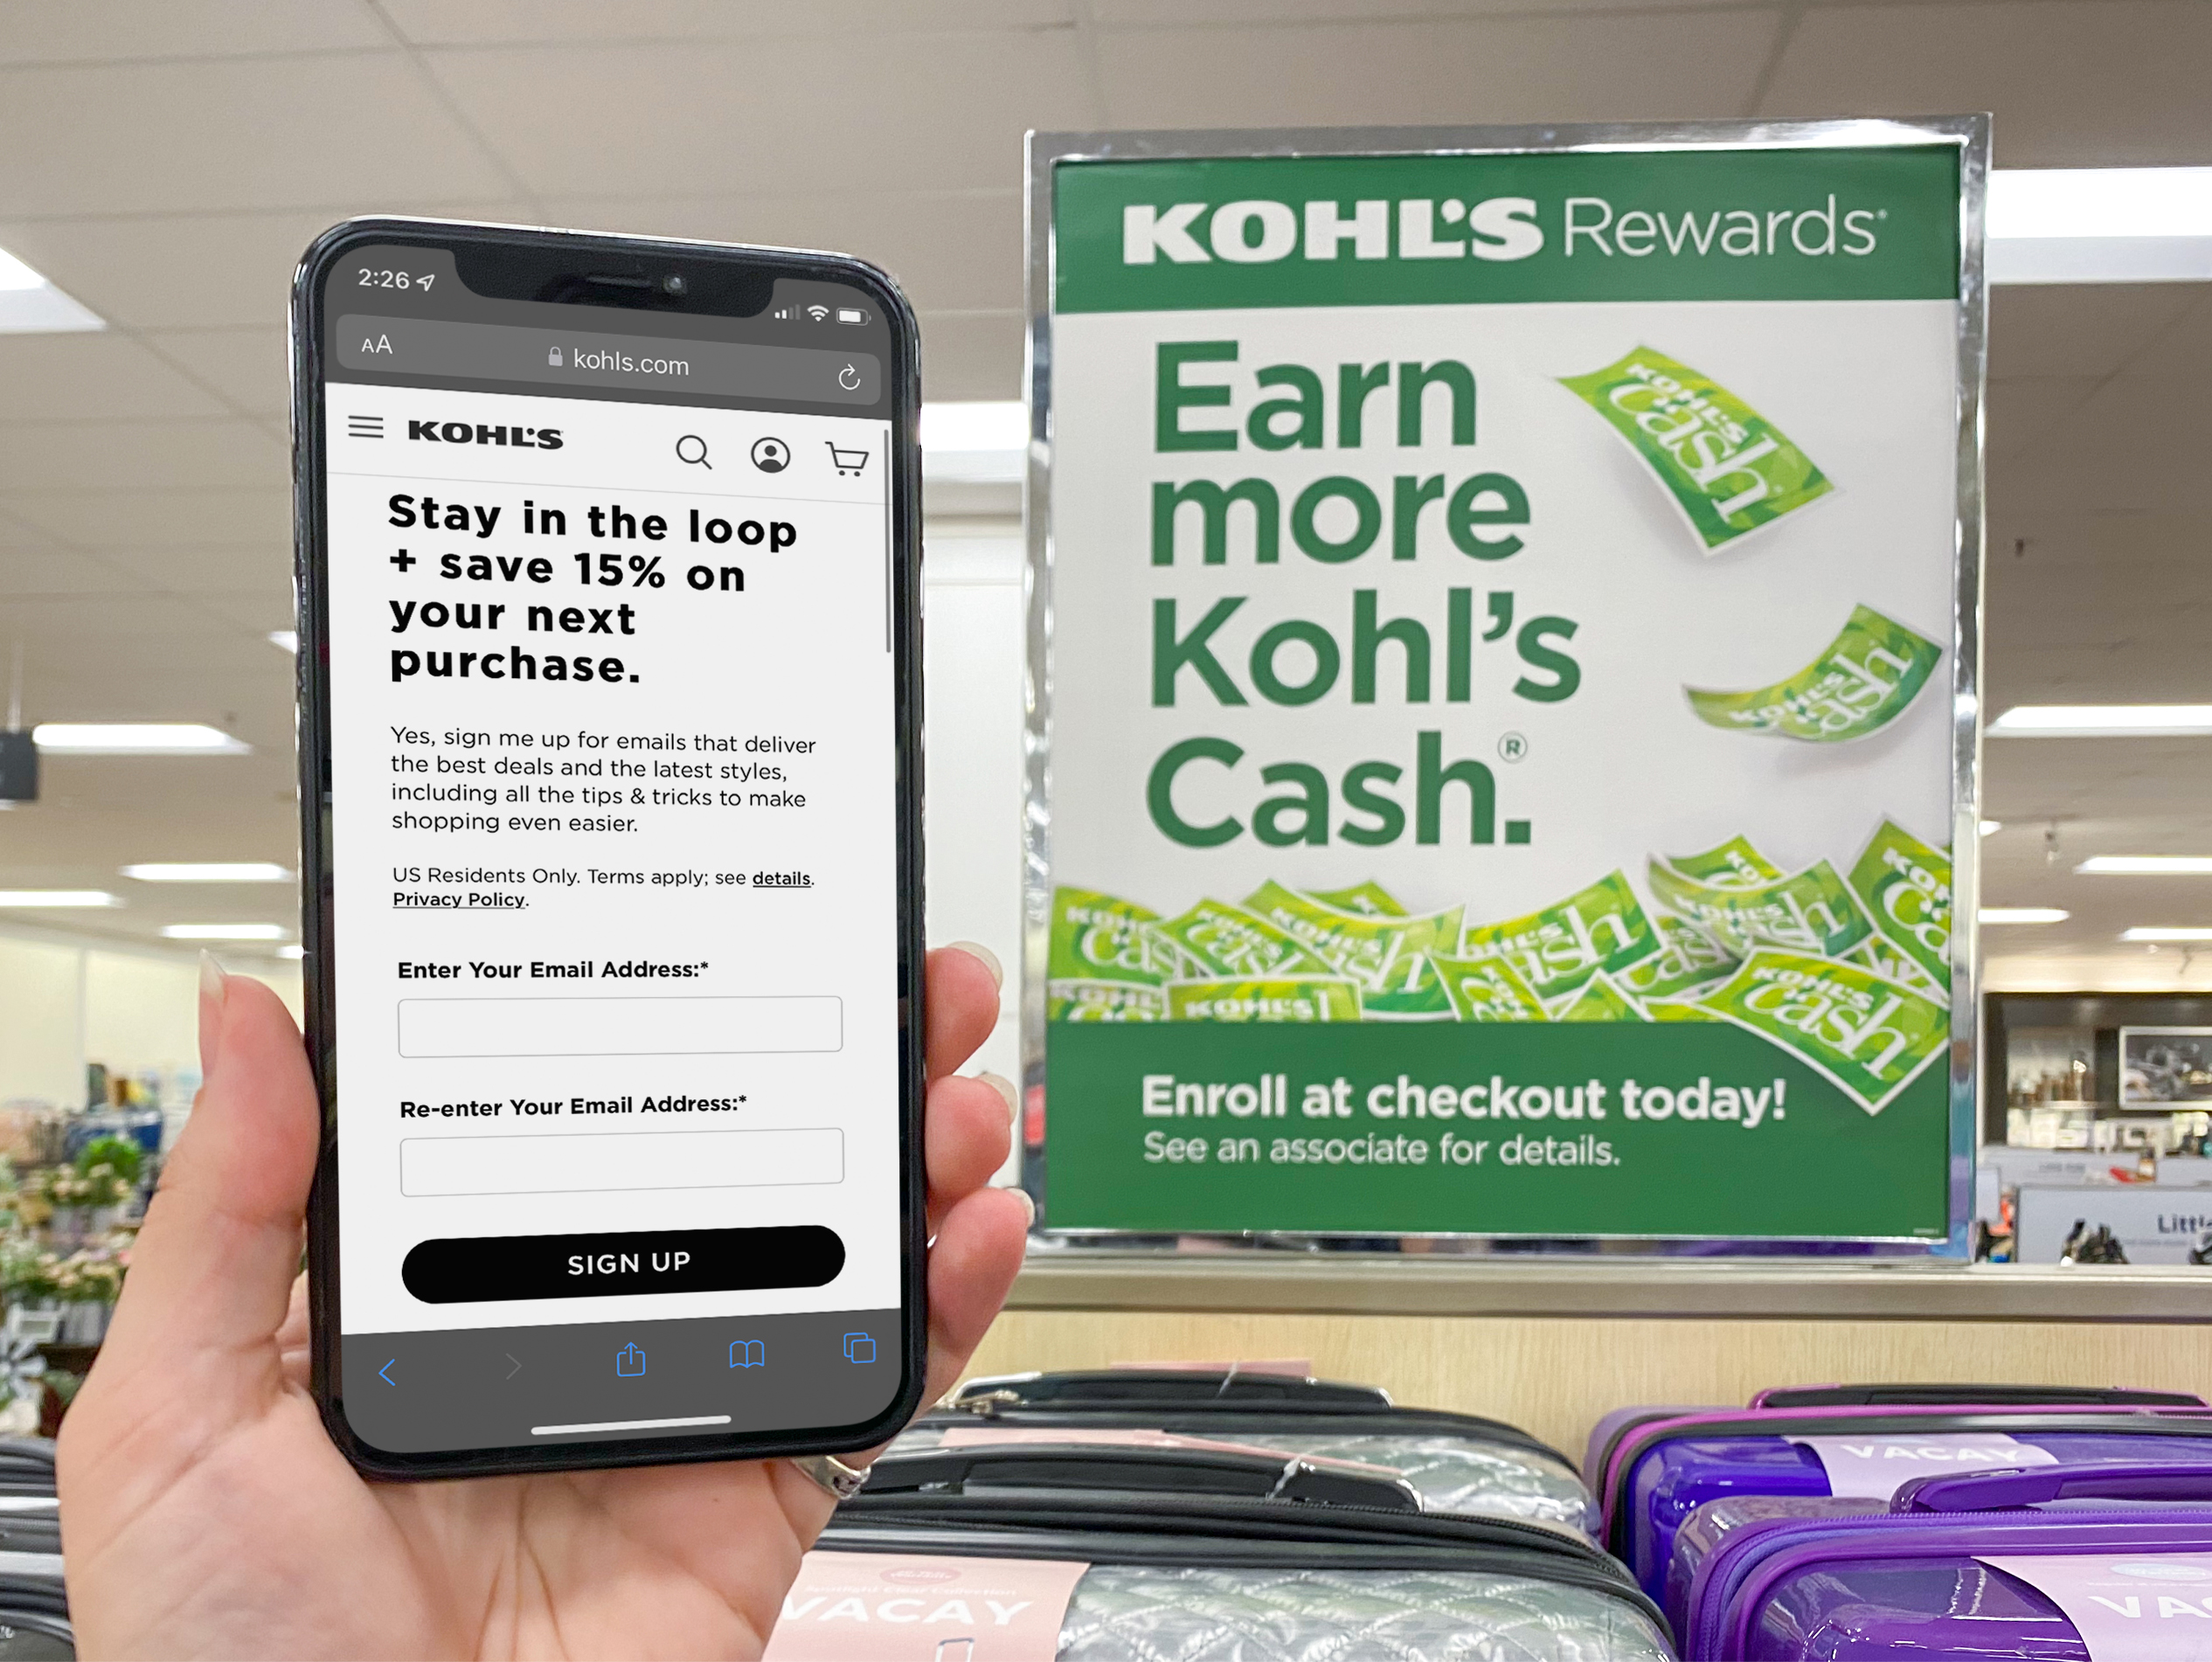 How To Login kohl's Credit Card Online 2022? Kohl's Credit Card Signin 